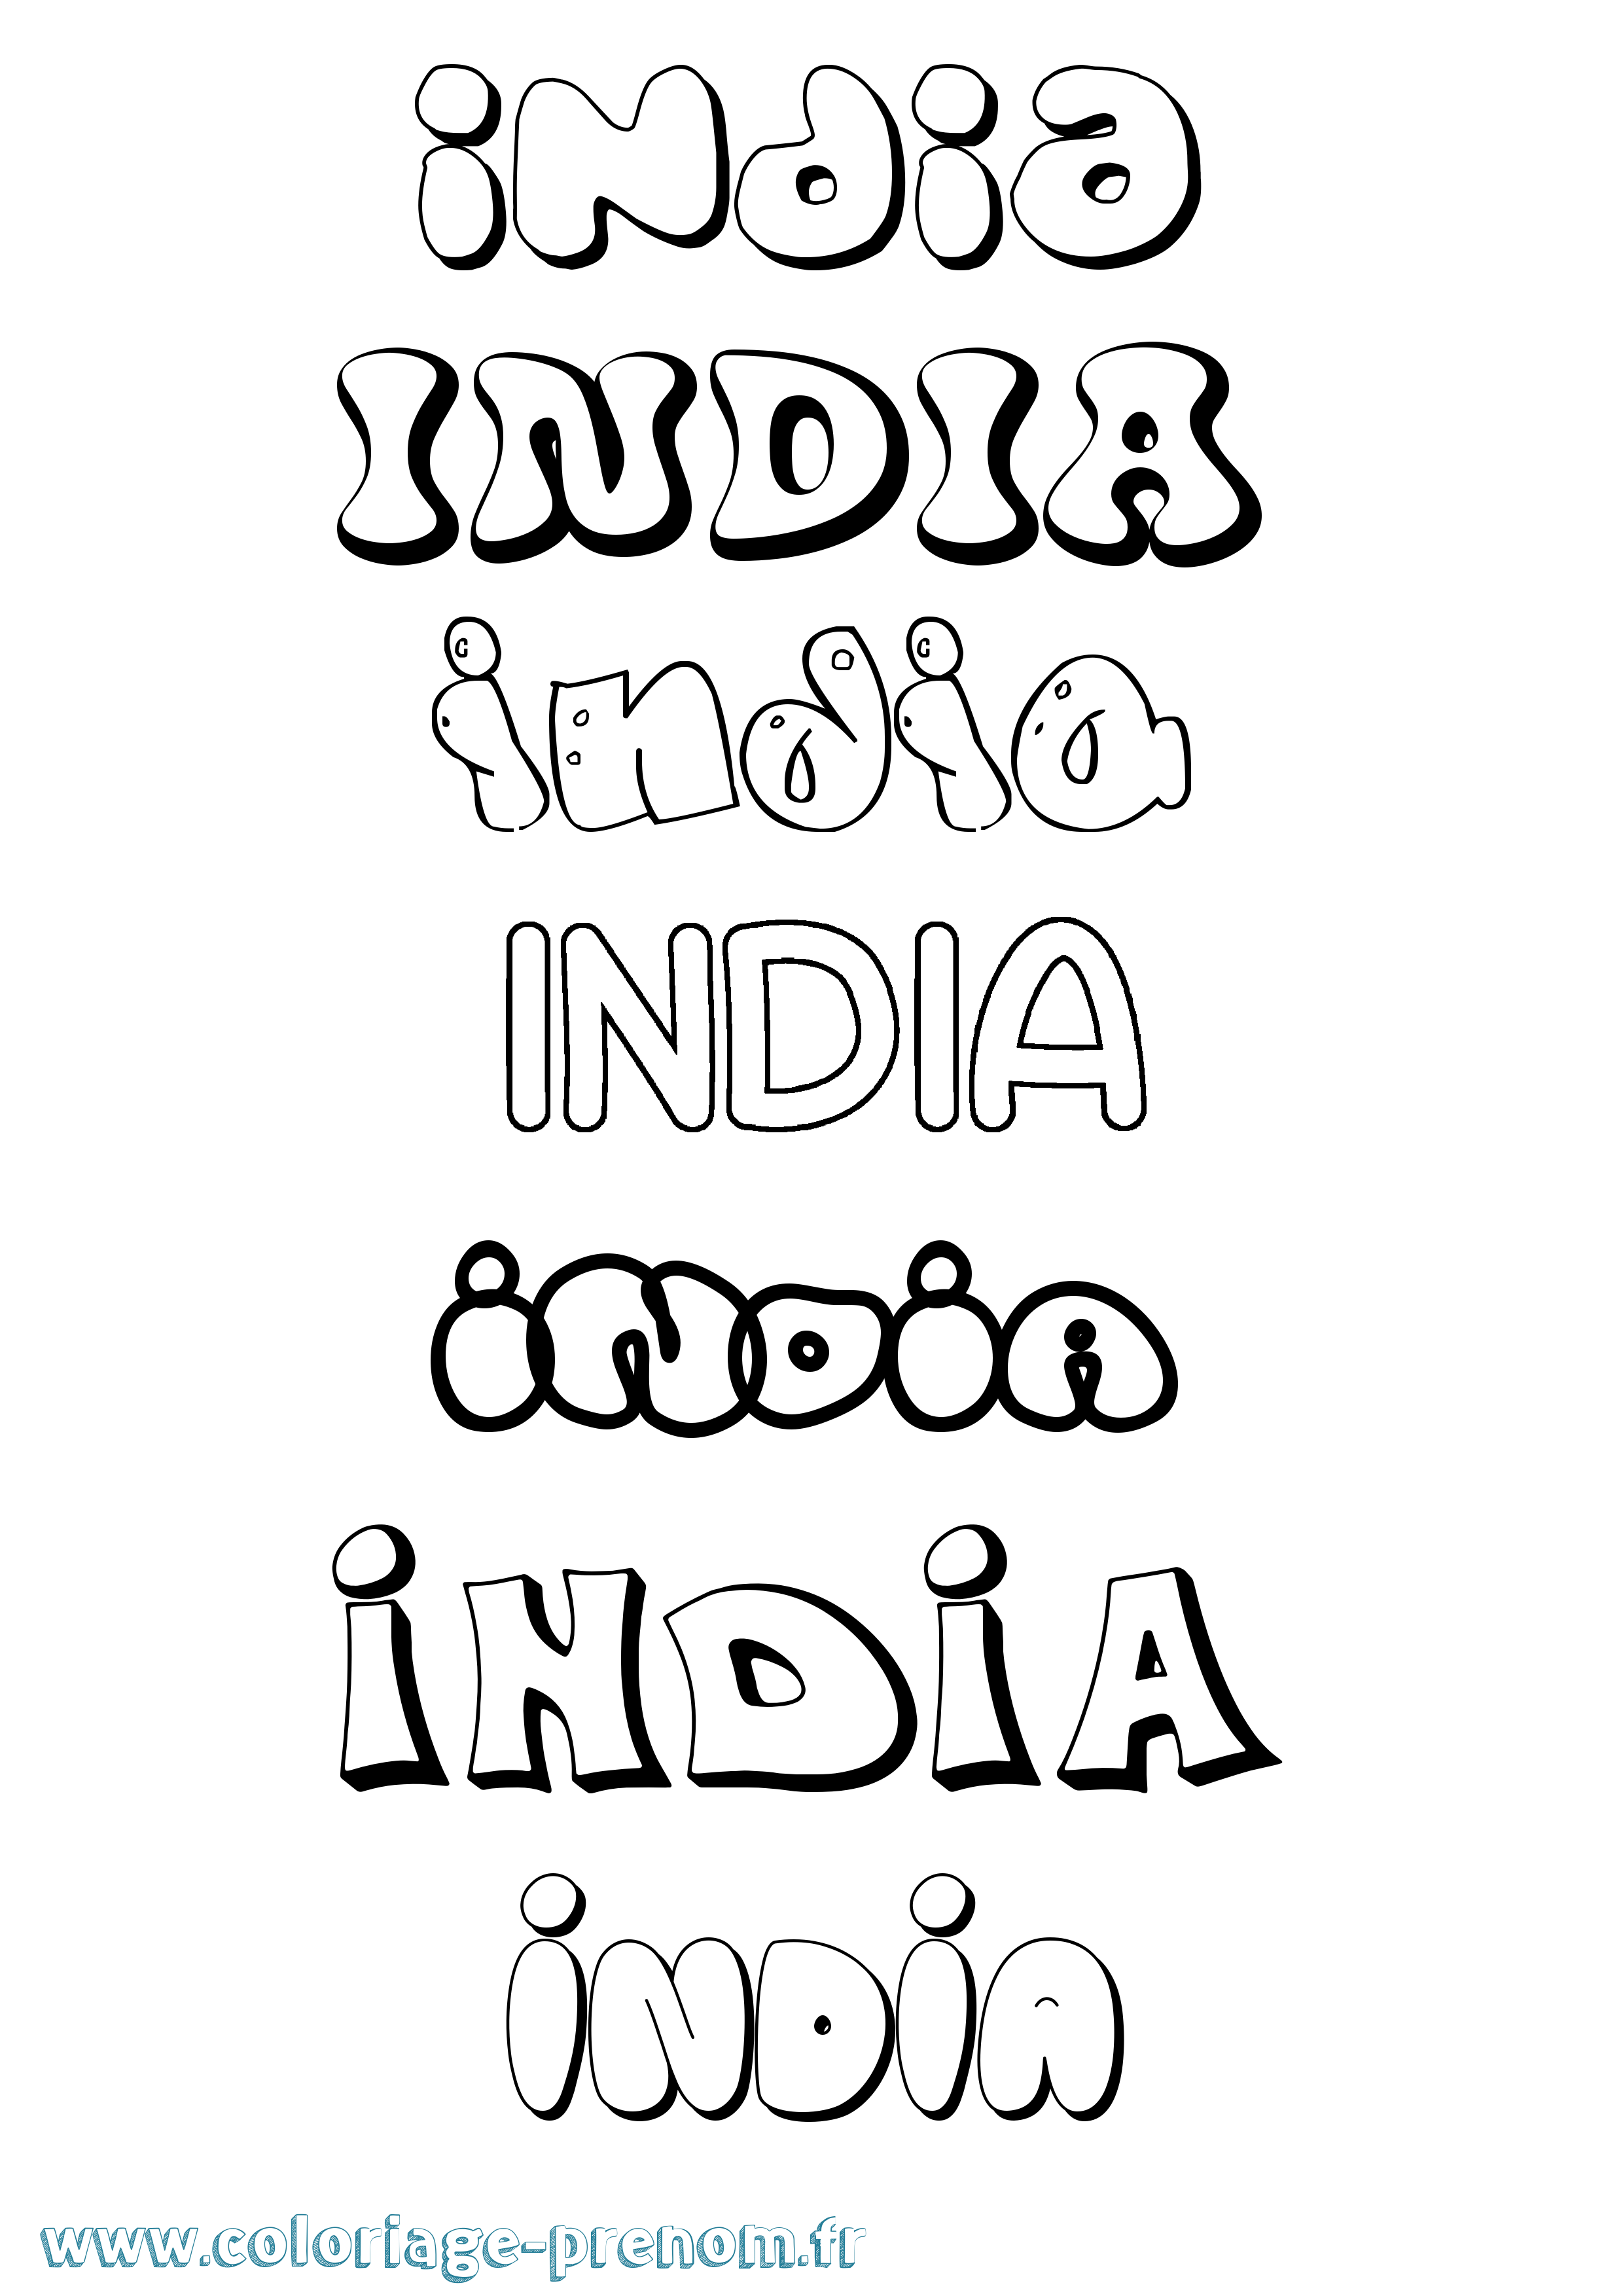 Coloriage prénom India Bubble